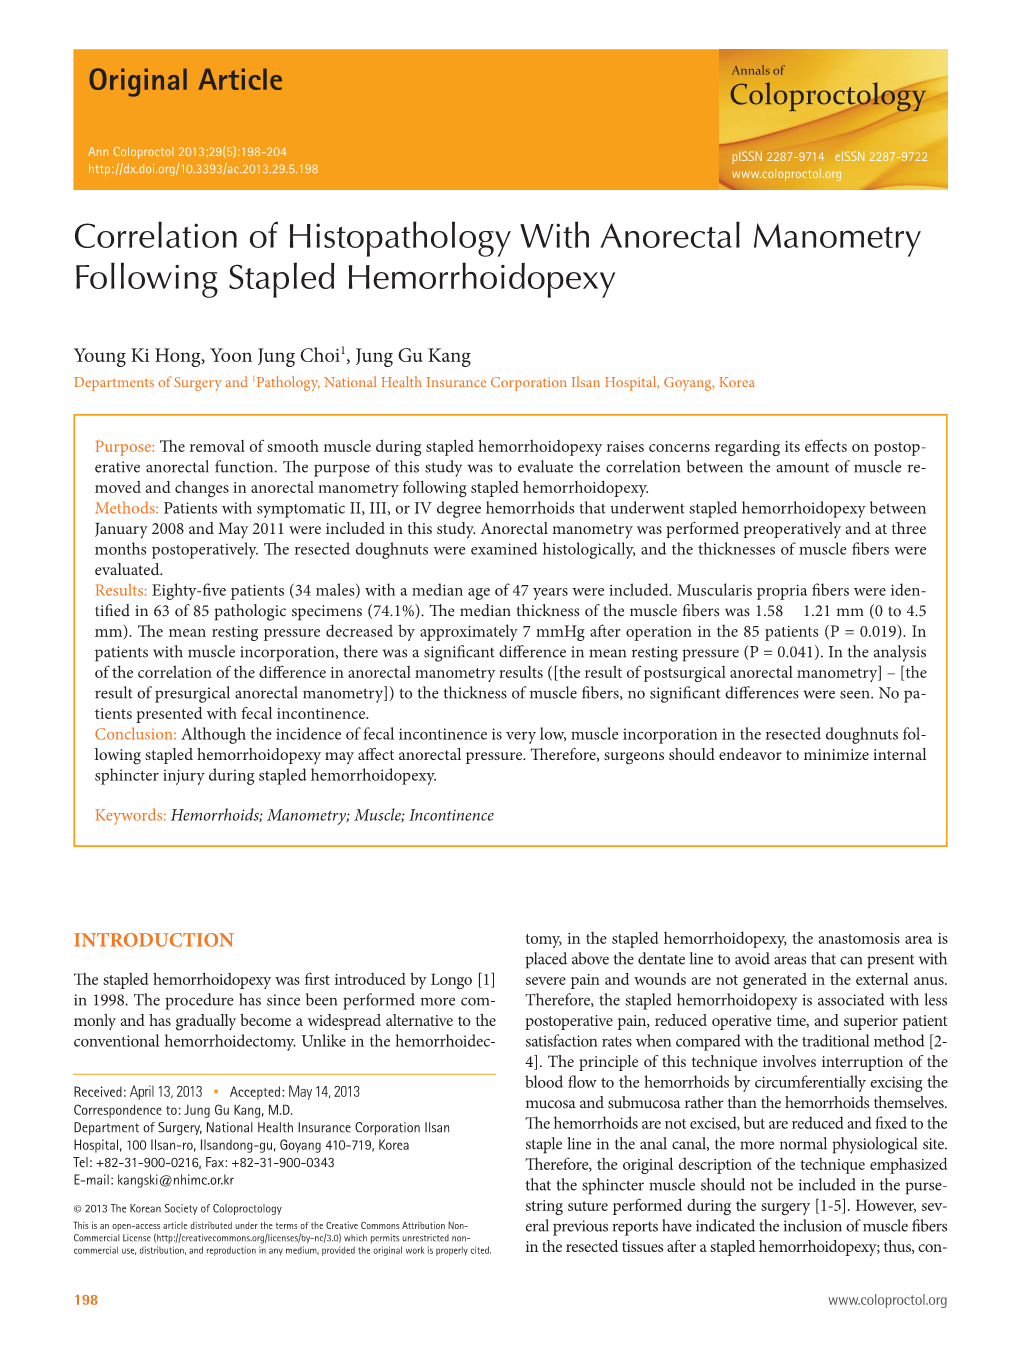 Correlation of Histopathology with Anorectal Manometry Following Stapled Hemorrhoidopexy